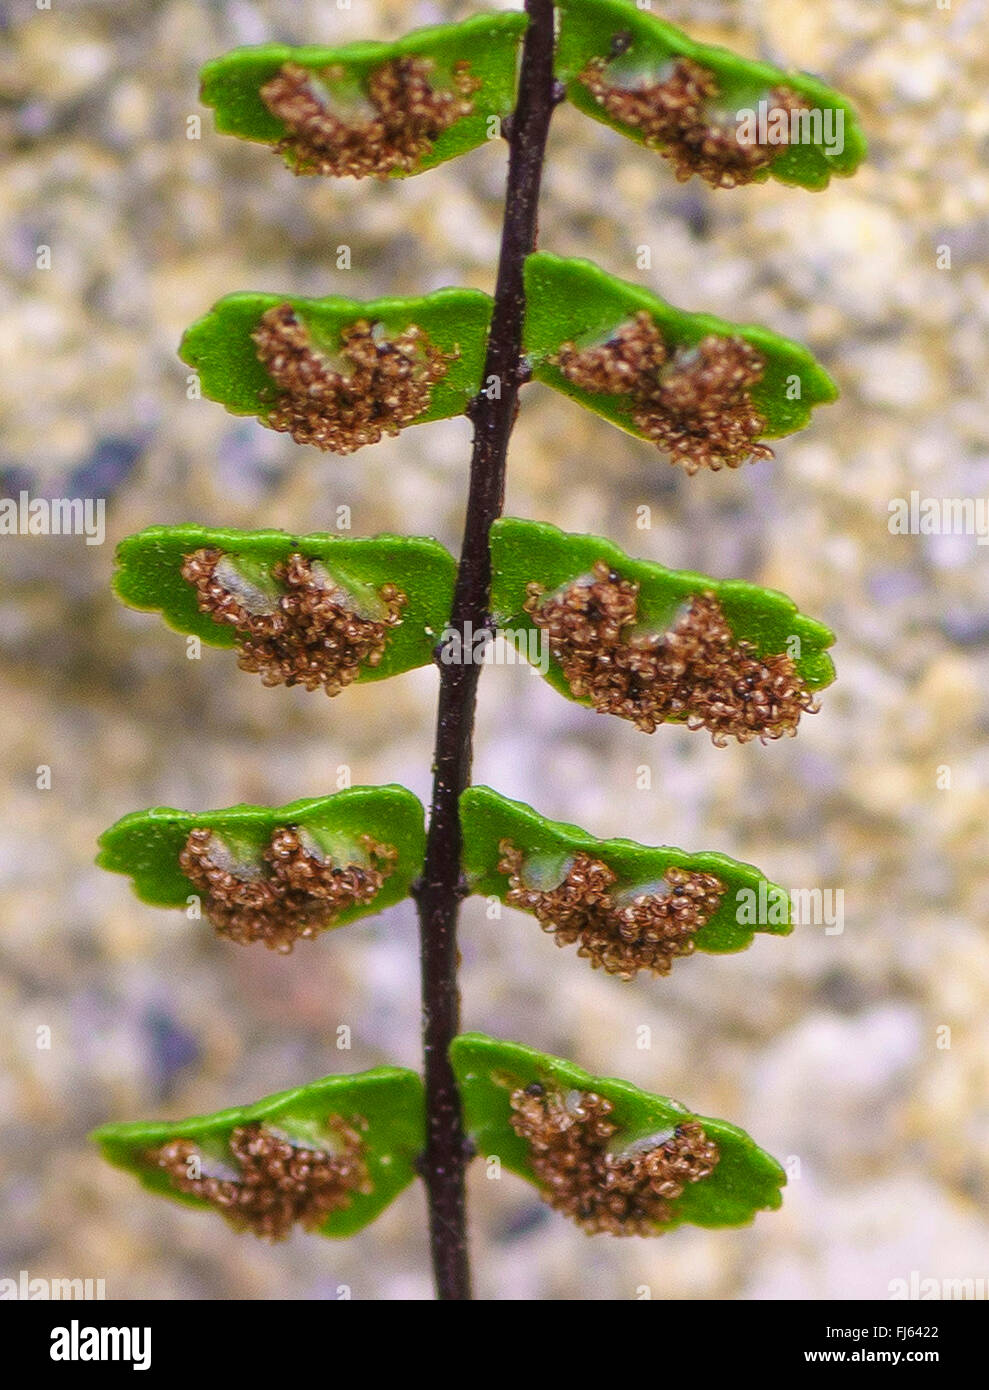 Maidenhair spleenwort, Common maidenhair (Asplenium trichomanes), underside of leaves with sor, Austria, Tyrol Stock Photo